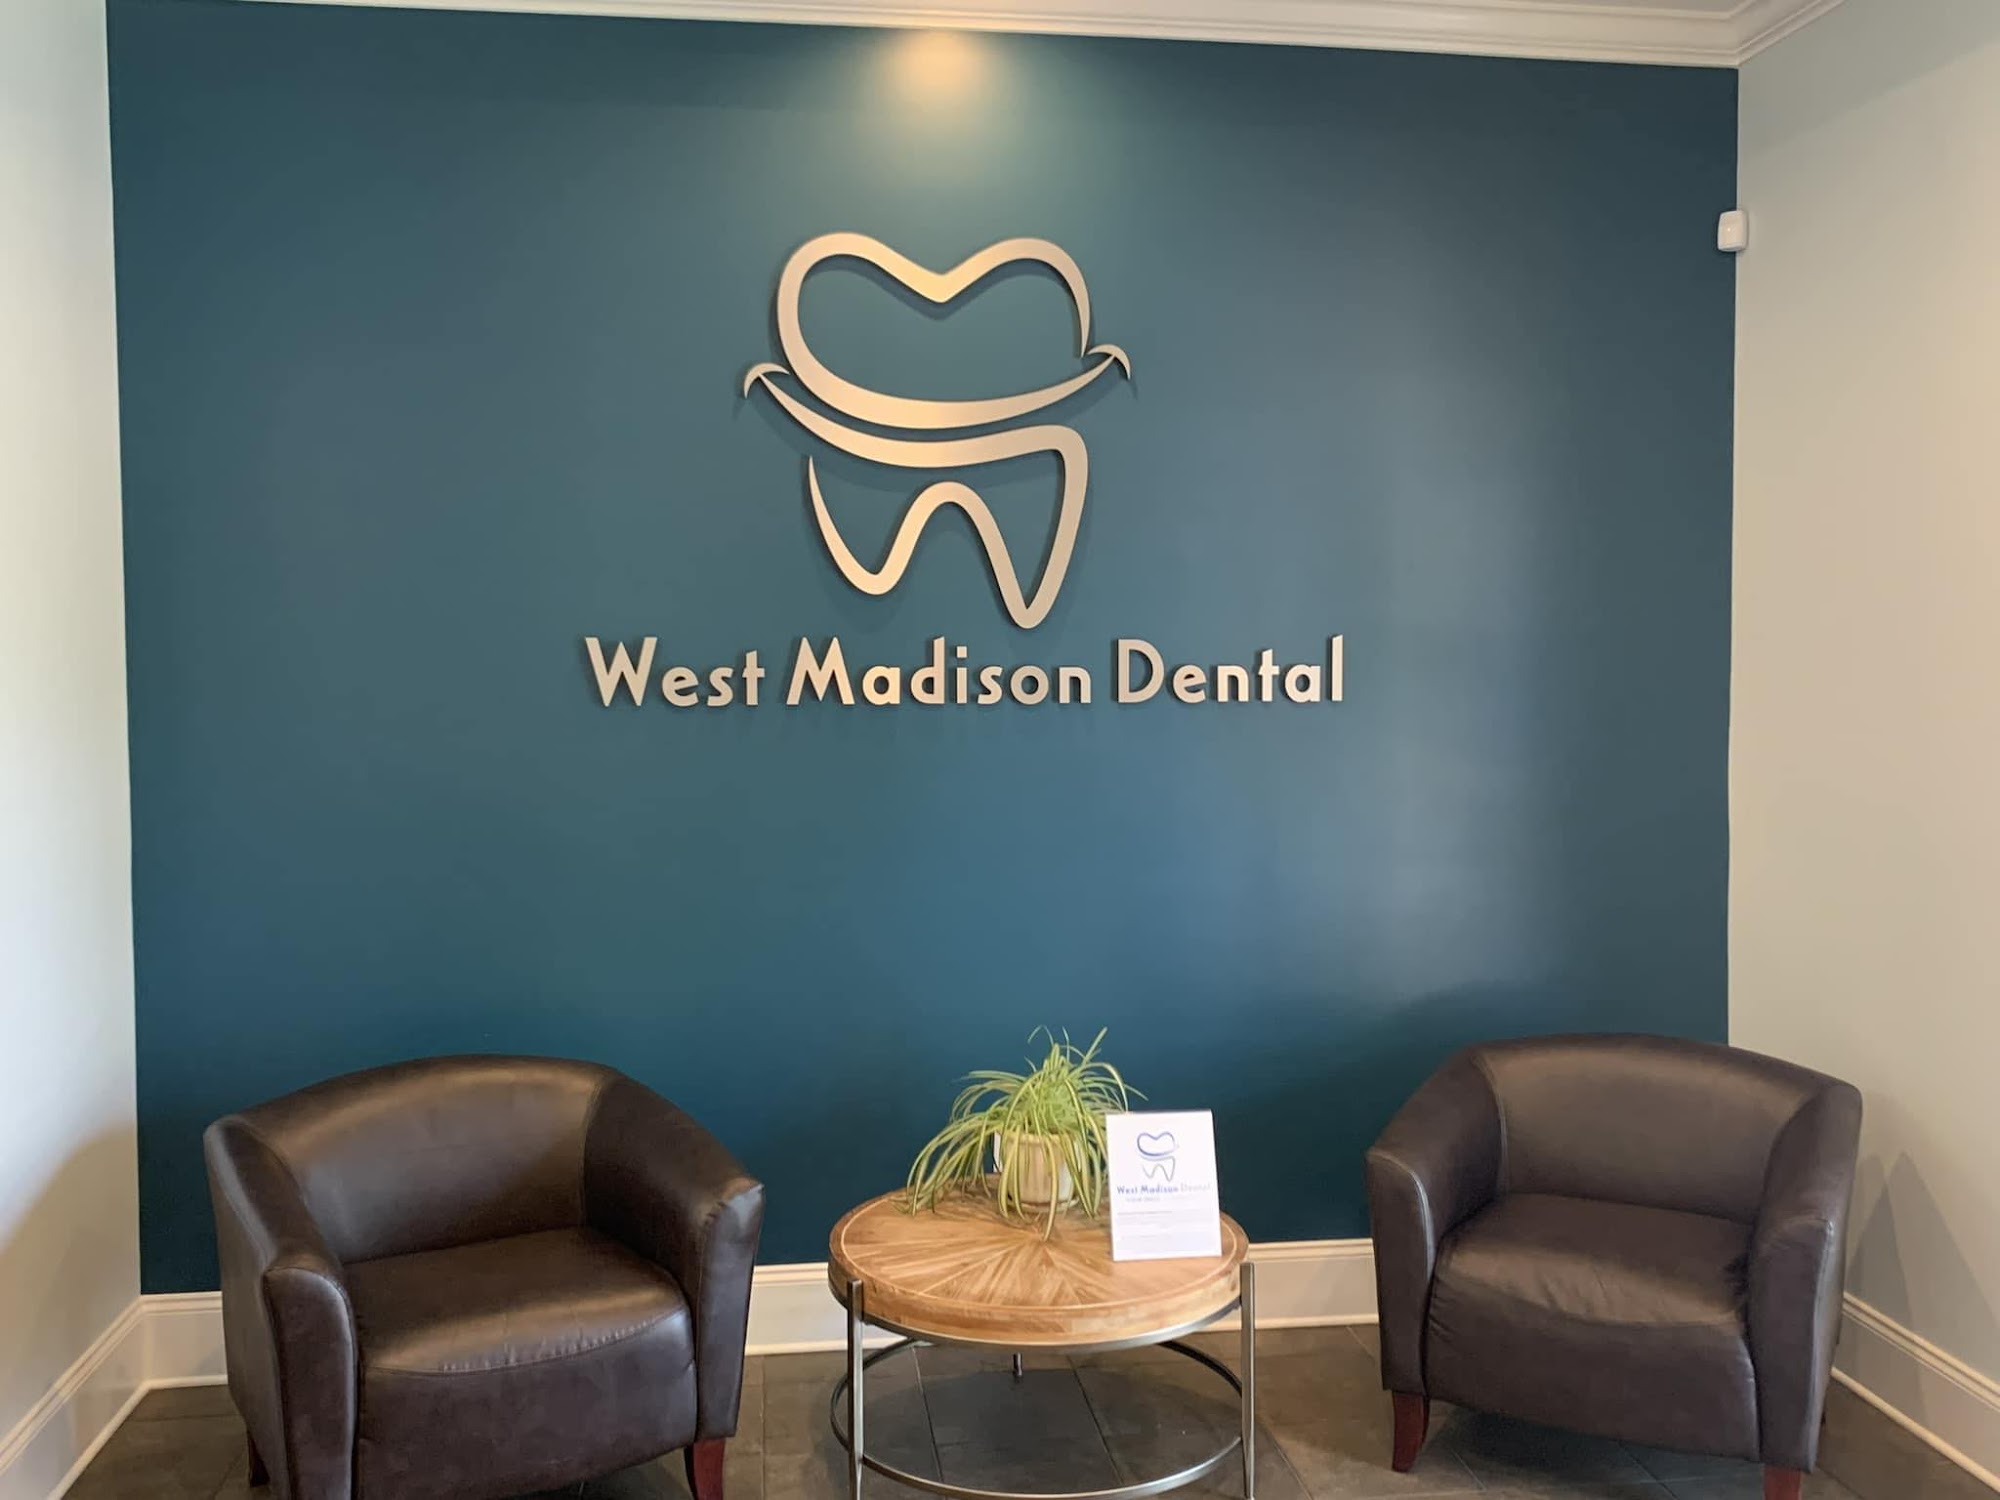 West Madison Dental